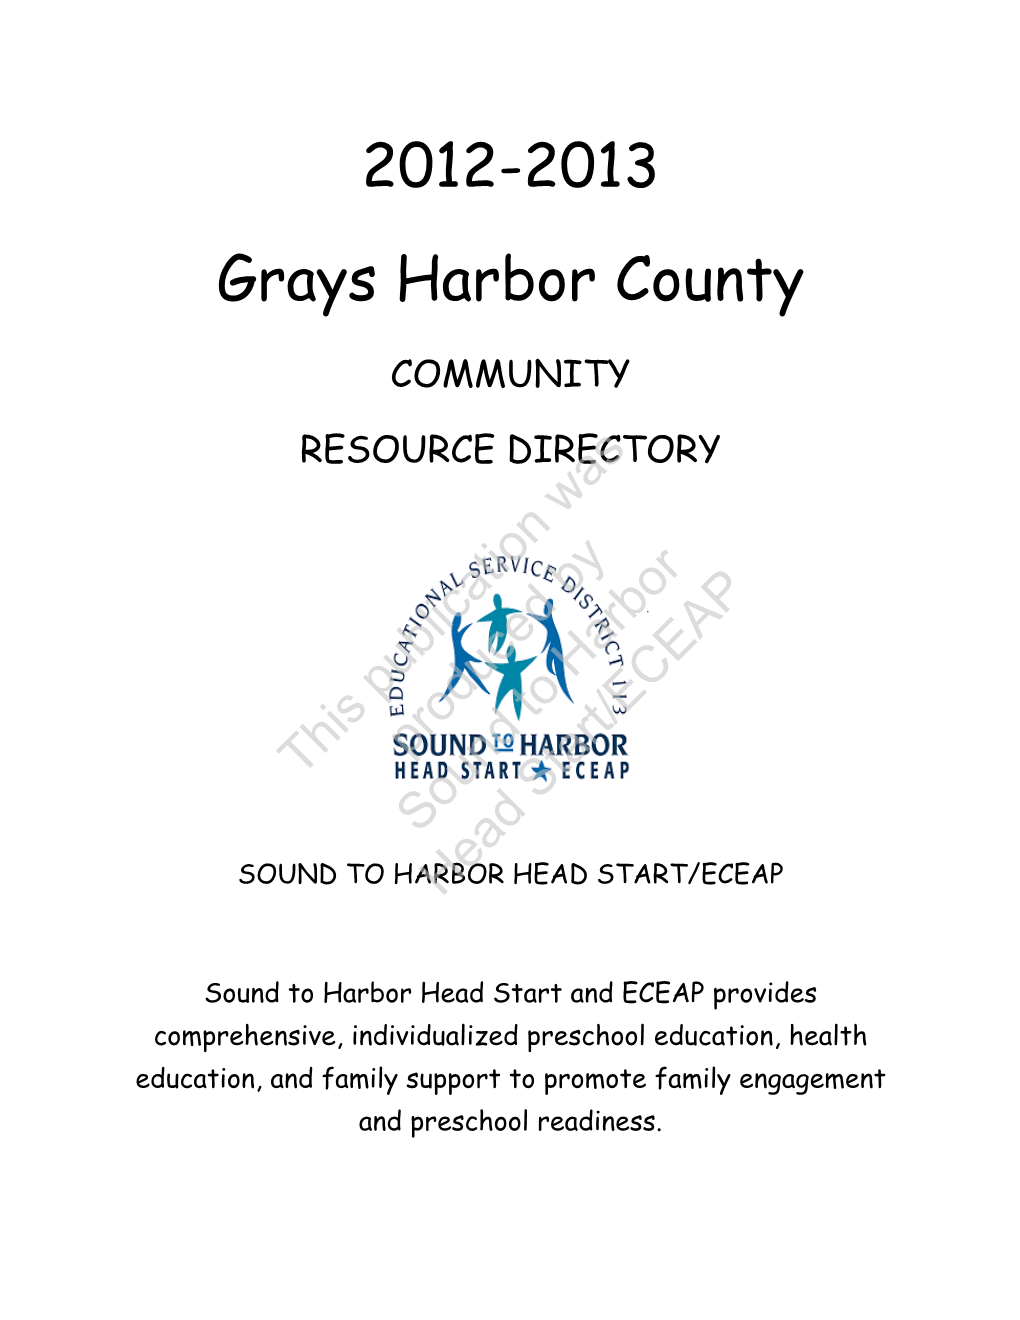 Grays Harbor Community Resource Directory 2012-13.Xlsx